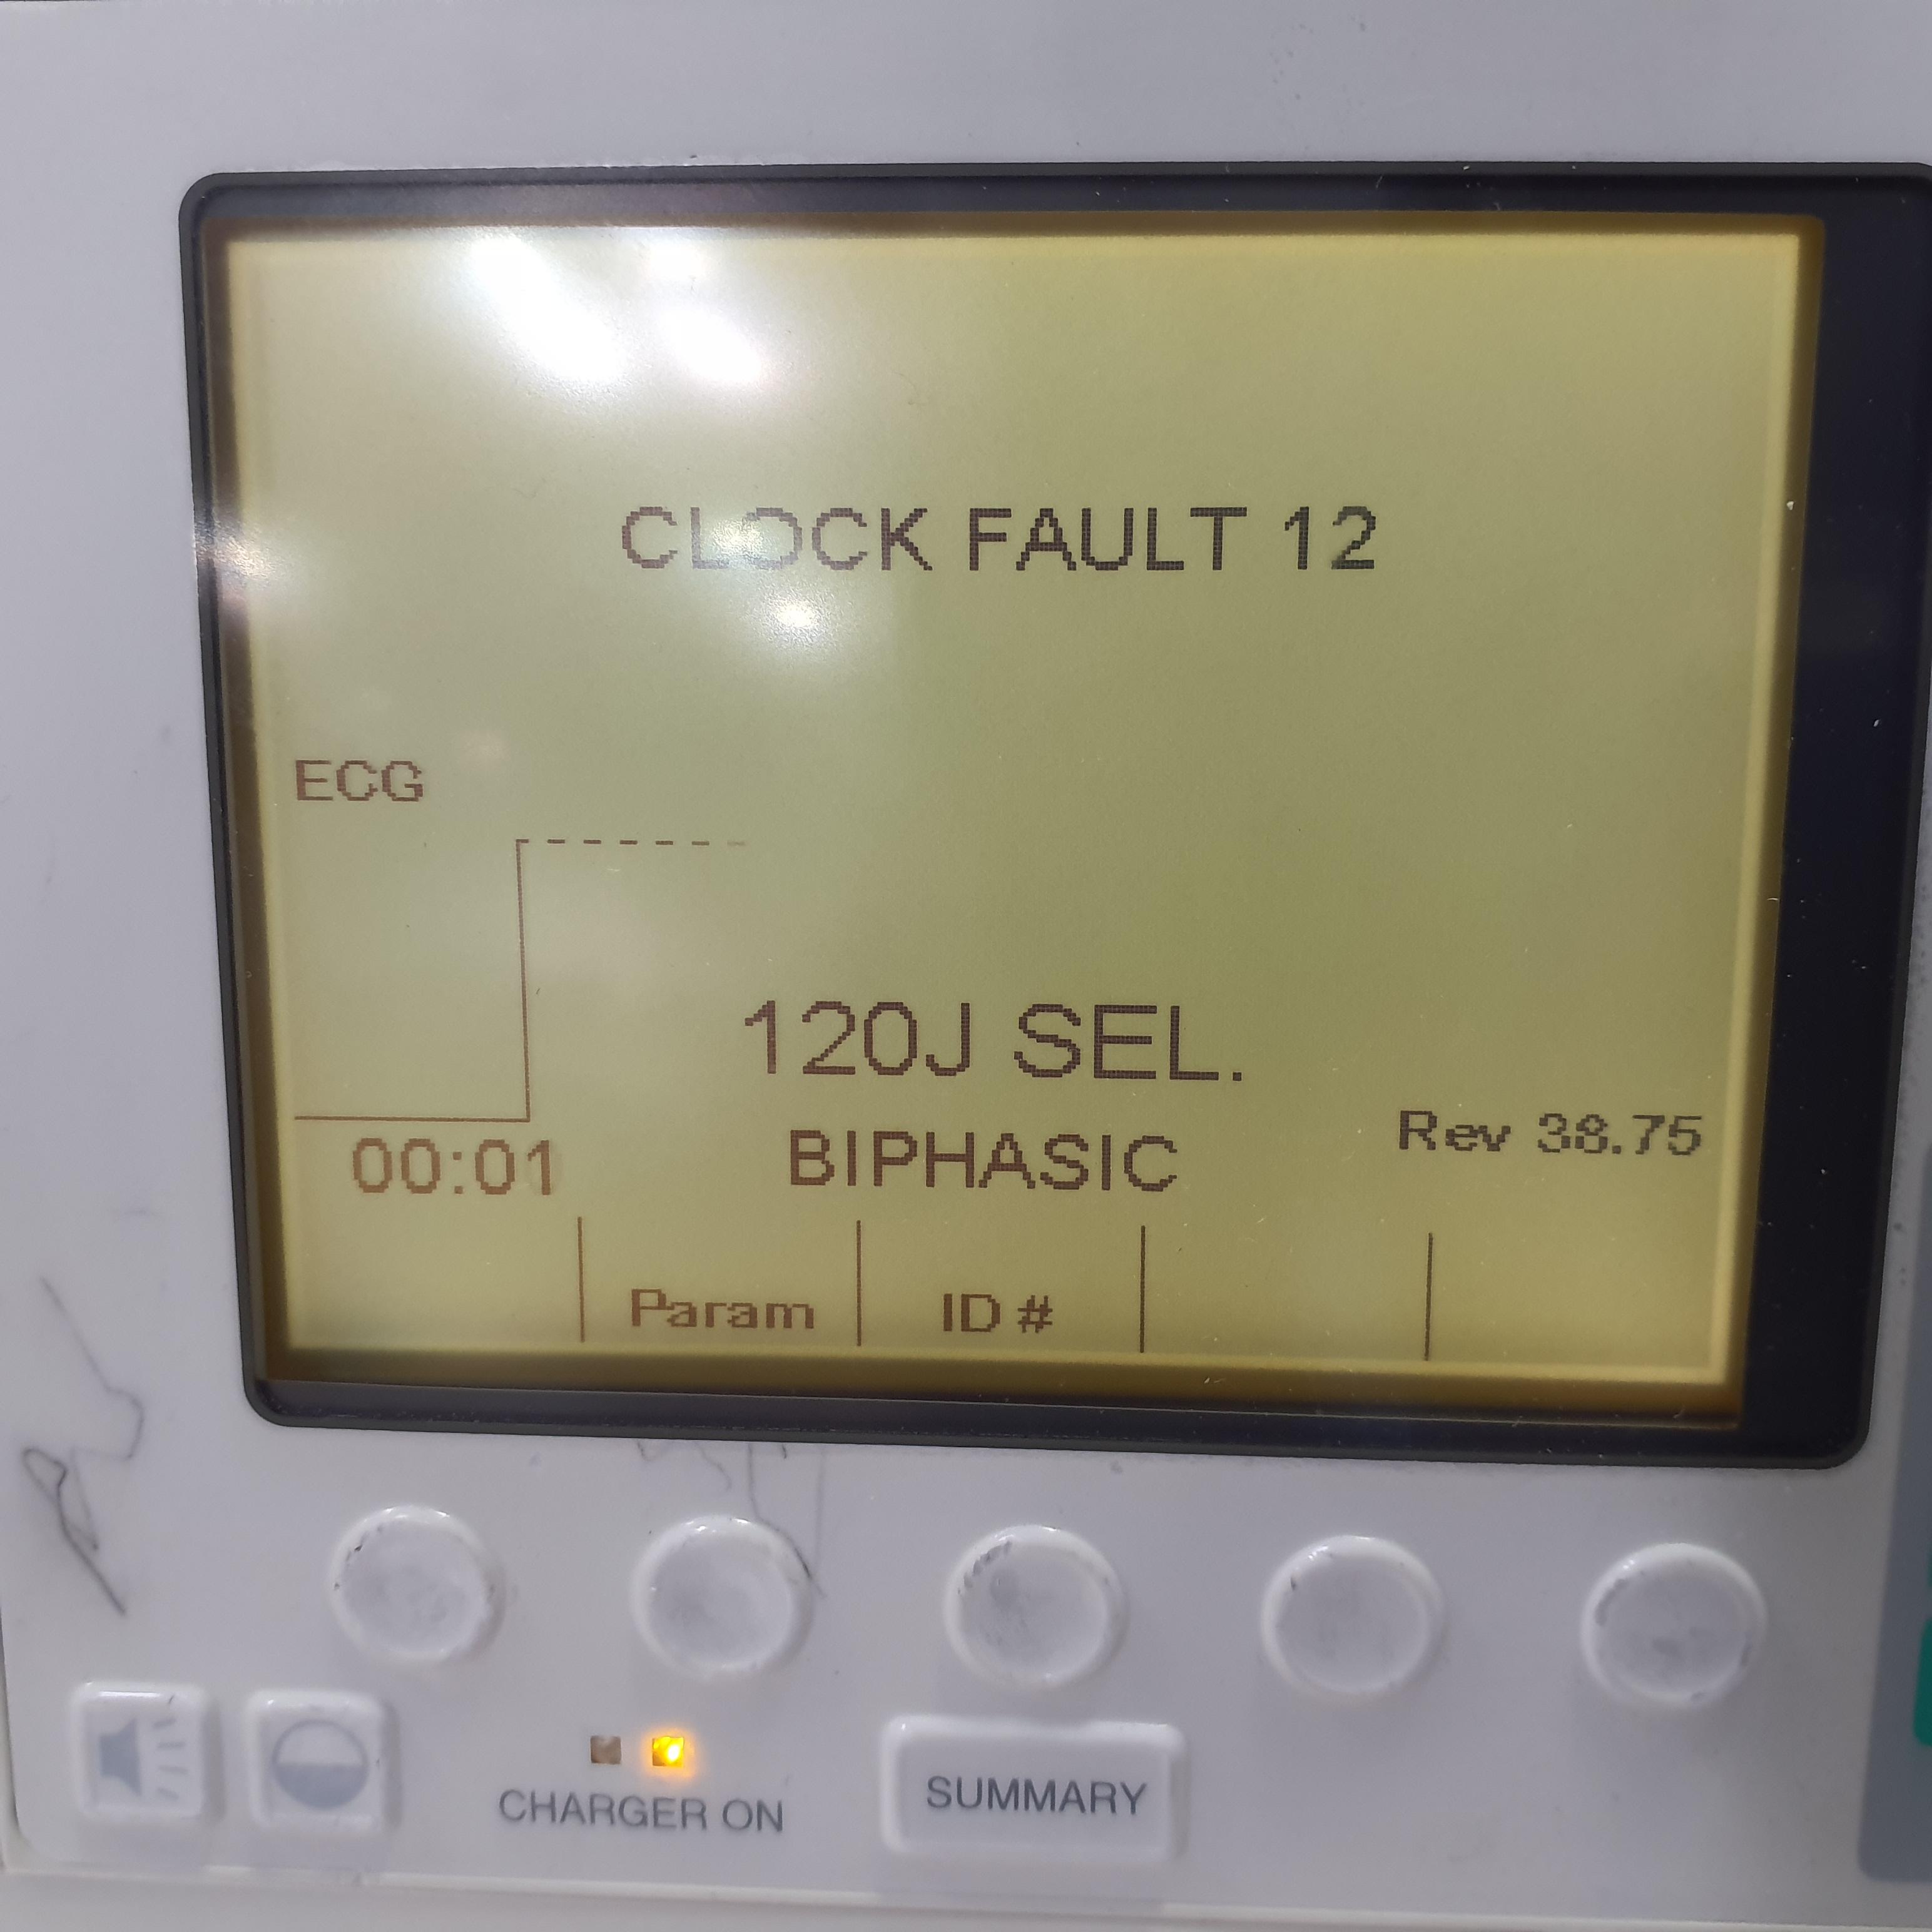 Zoll M Series Defibrillator - 366908